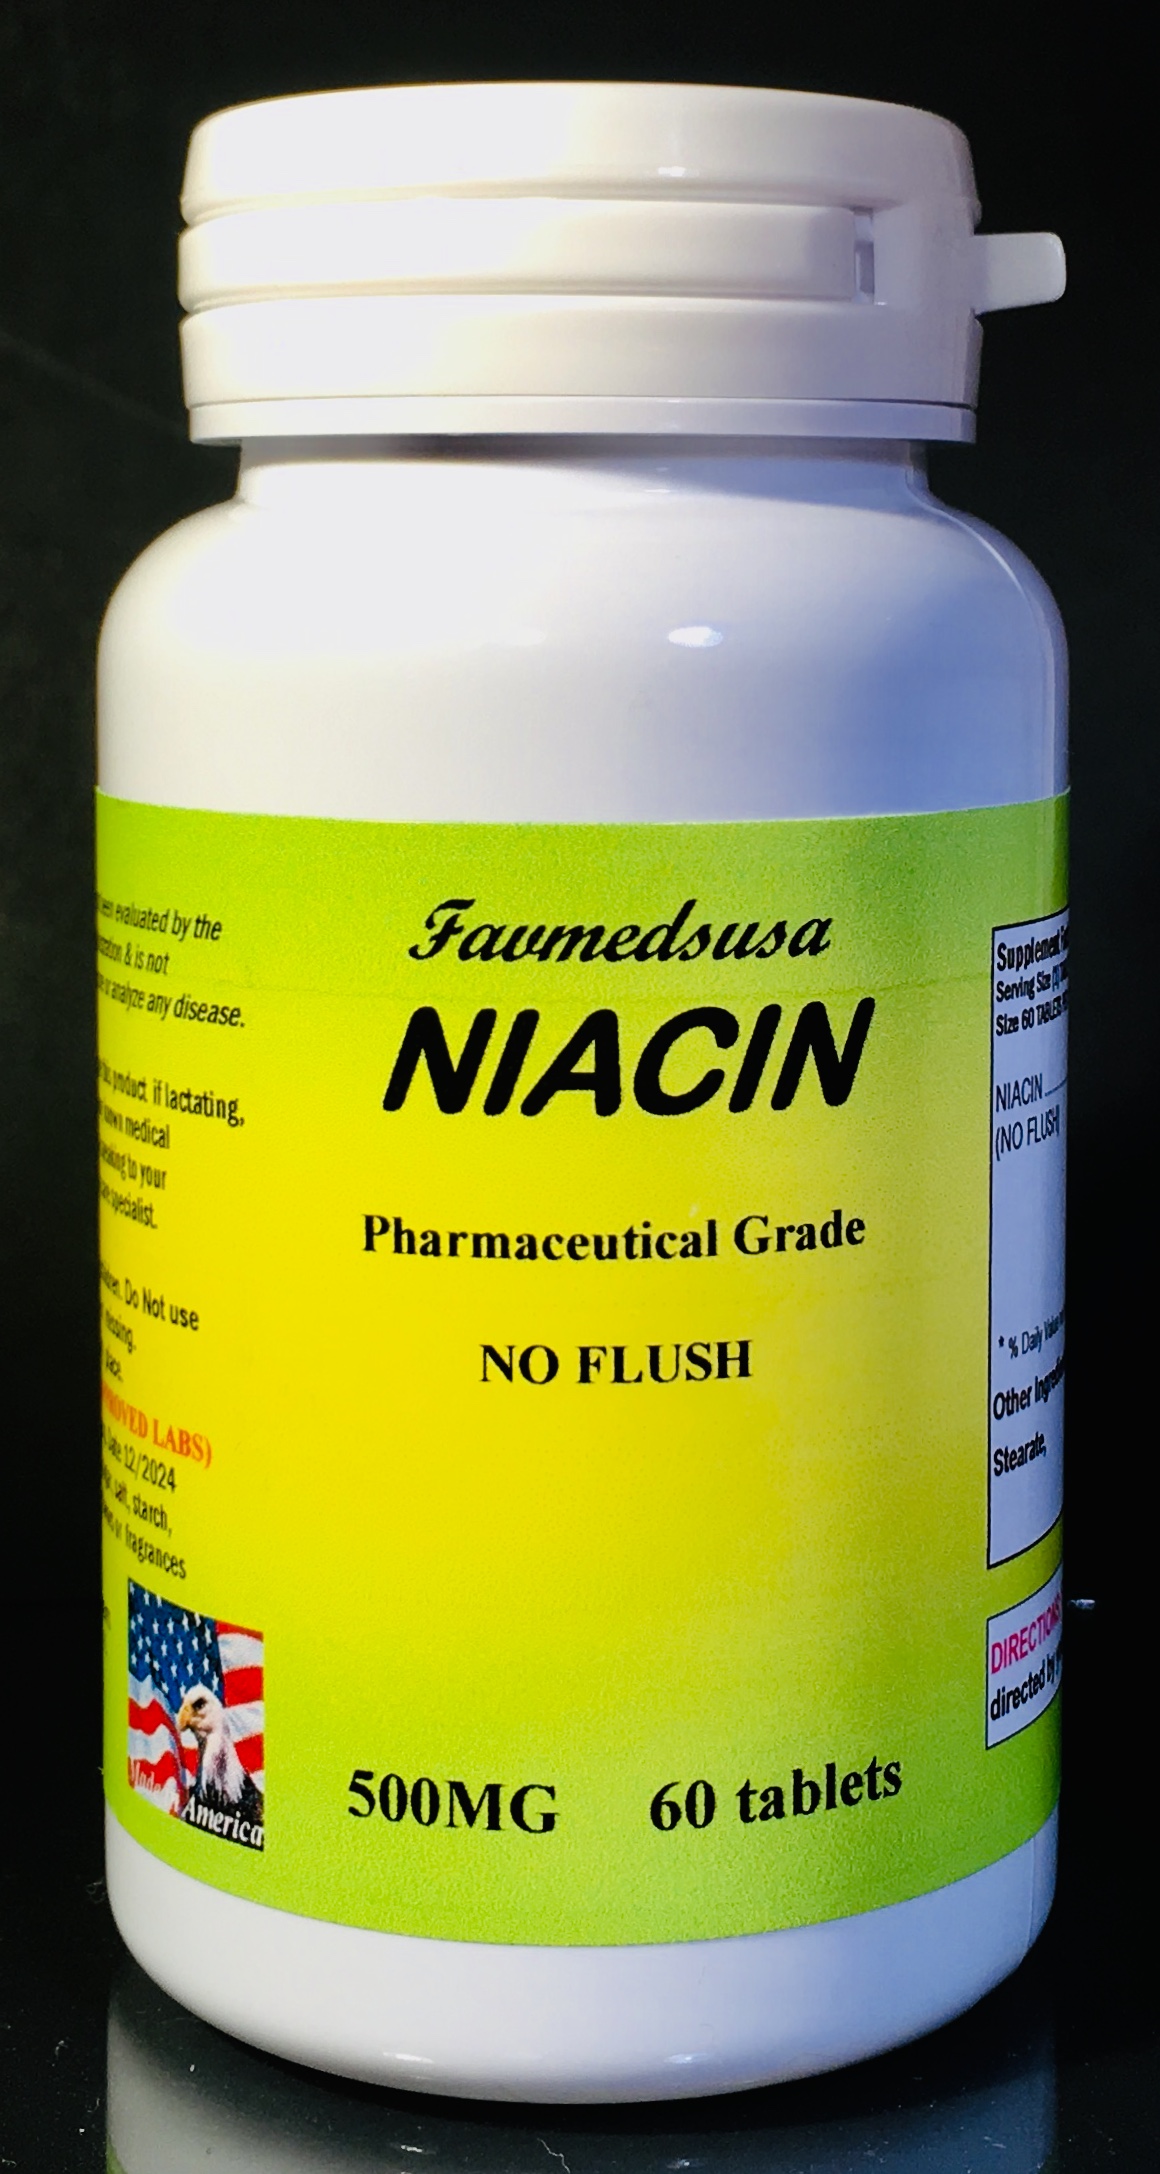 Niacin No flush 500mg - 60 tablets